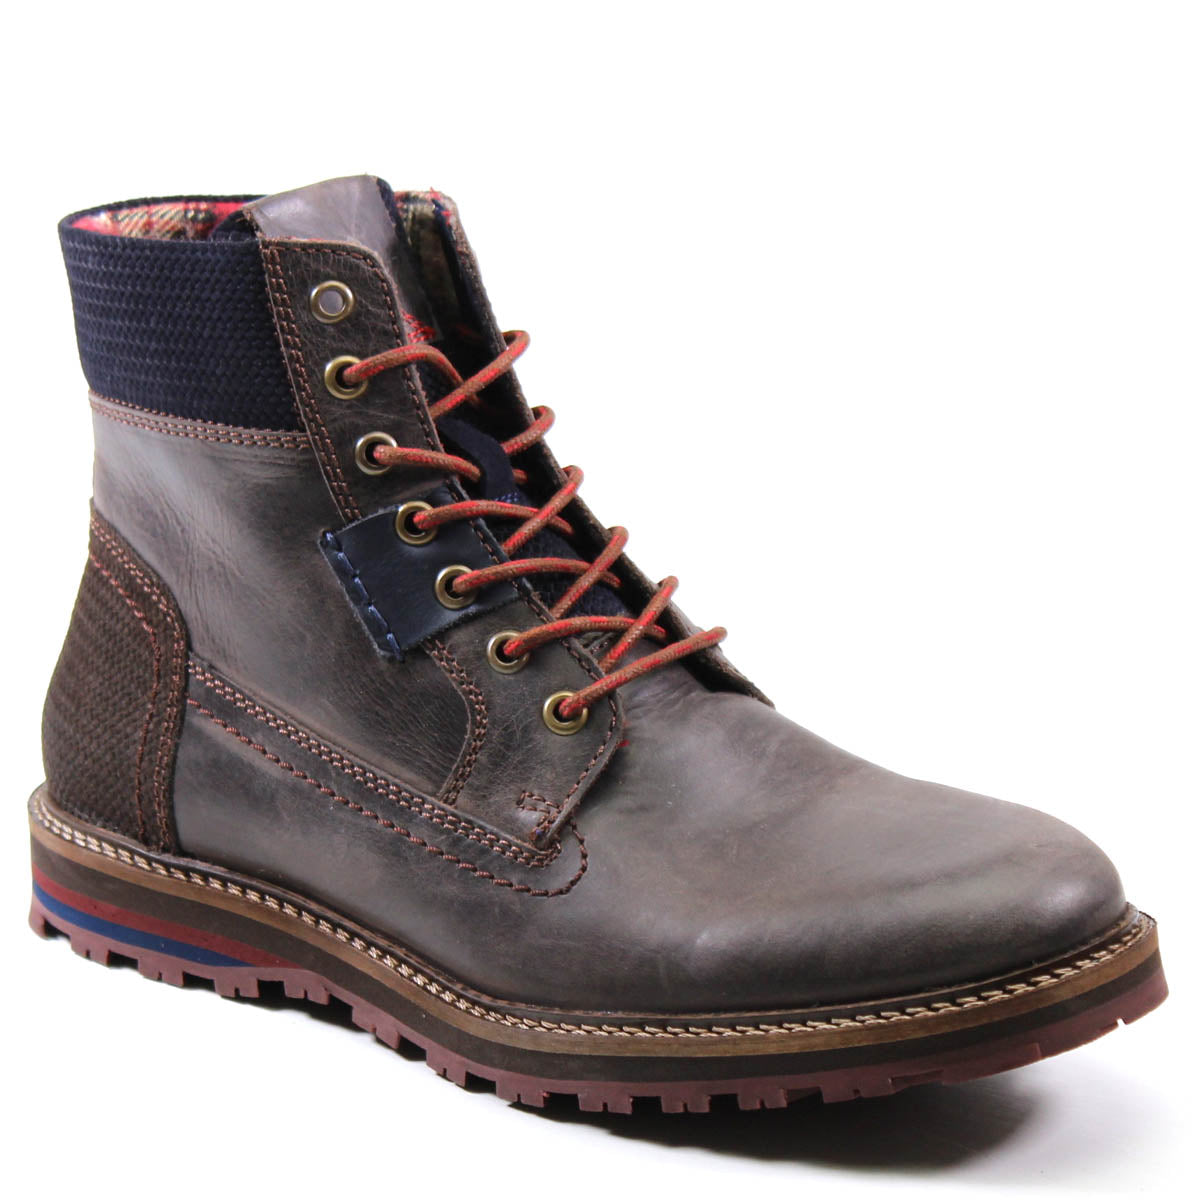 Testosterone Hook One Men's Leather Boot - Dark Brown Navy